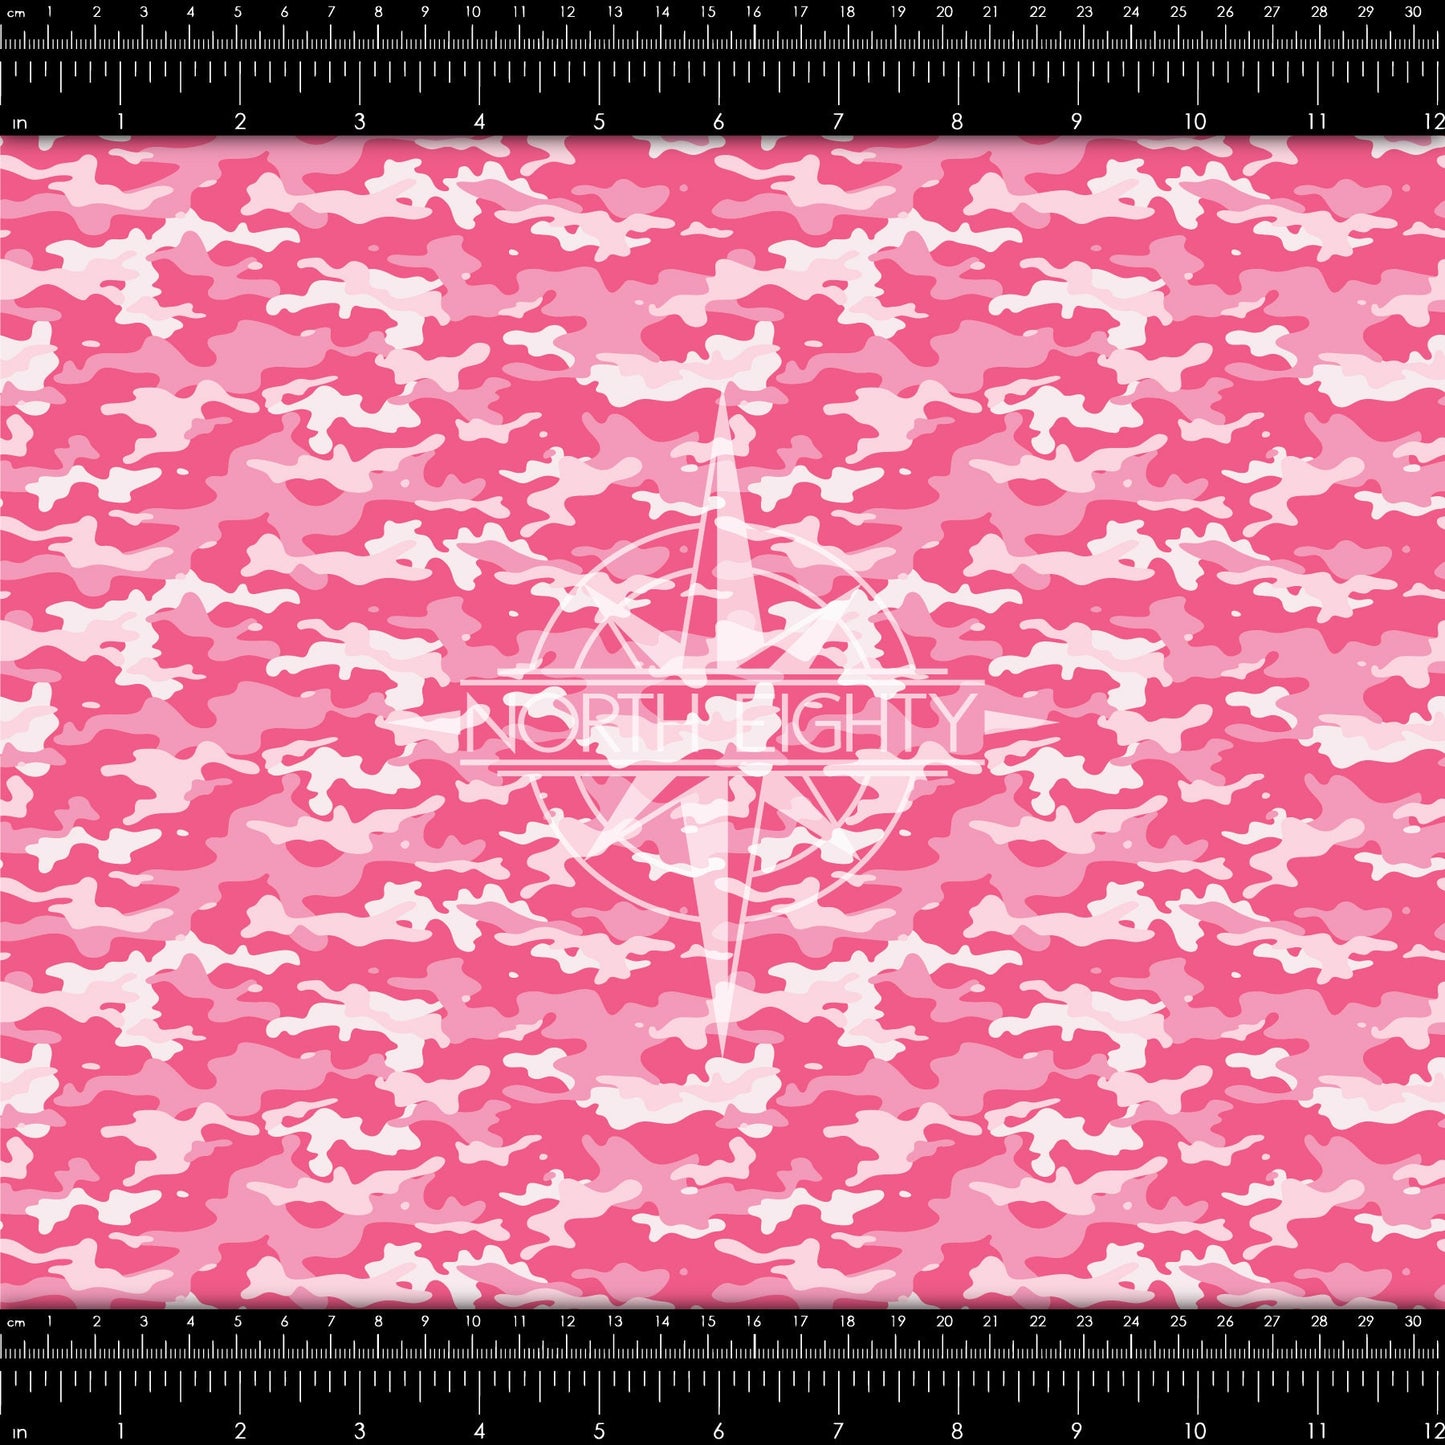 Camouflage htv - Camo Vinyl - Pink Print - Pink Camouflage - Camouflage - Pink htv - Camouflage - Camo - Pink